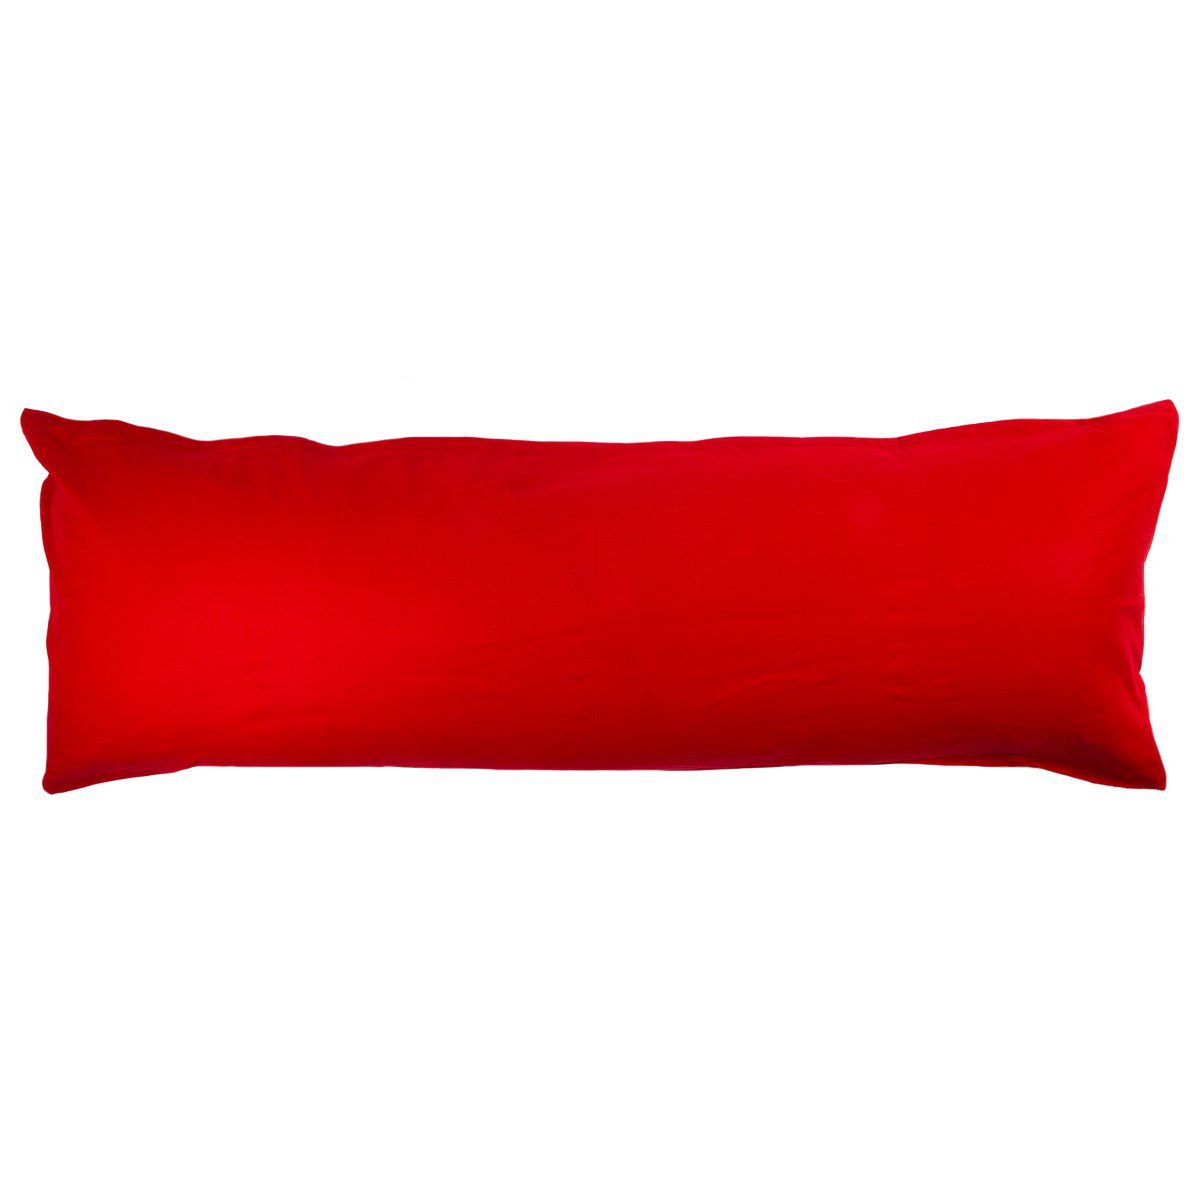 4Home povlak na Relaxační polštář Náhradní manžel červená, 50 x 150 cm - 4home.cz